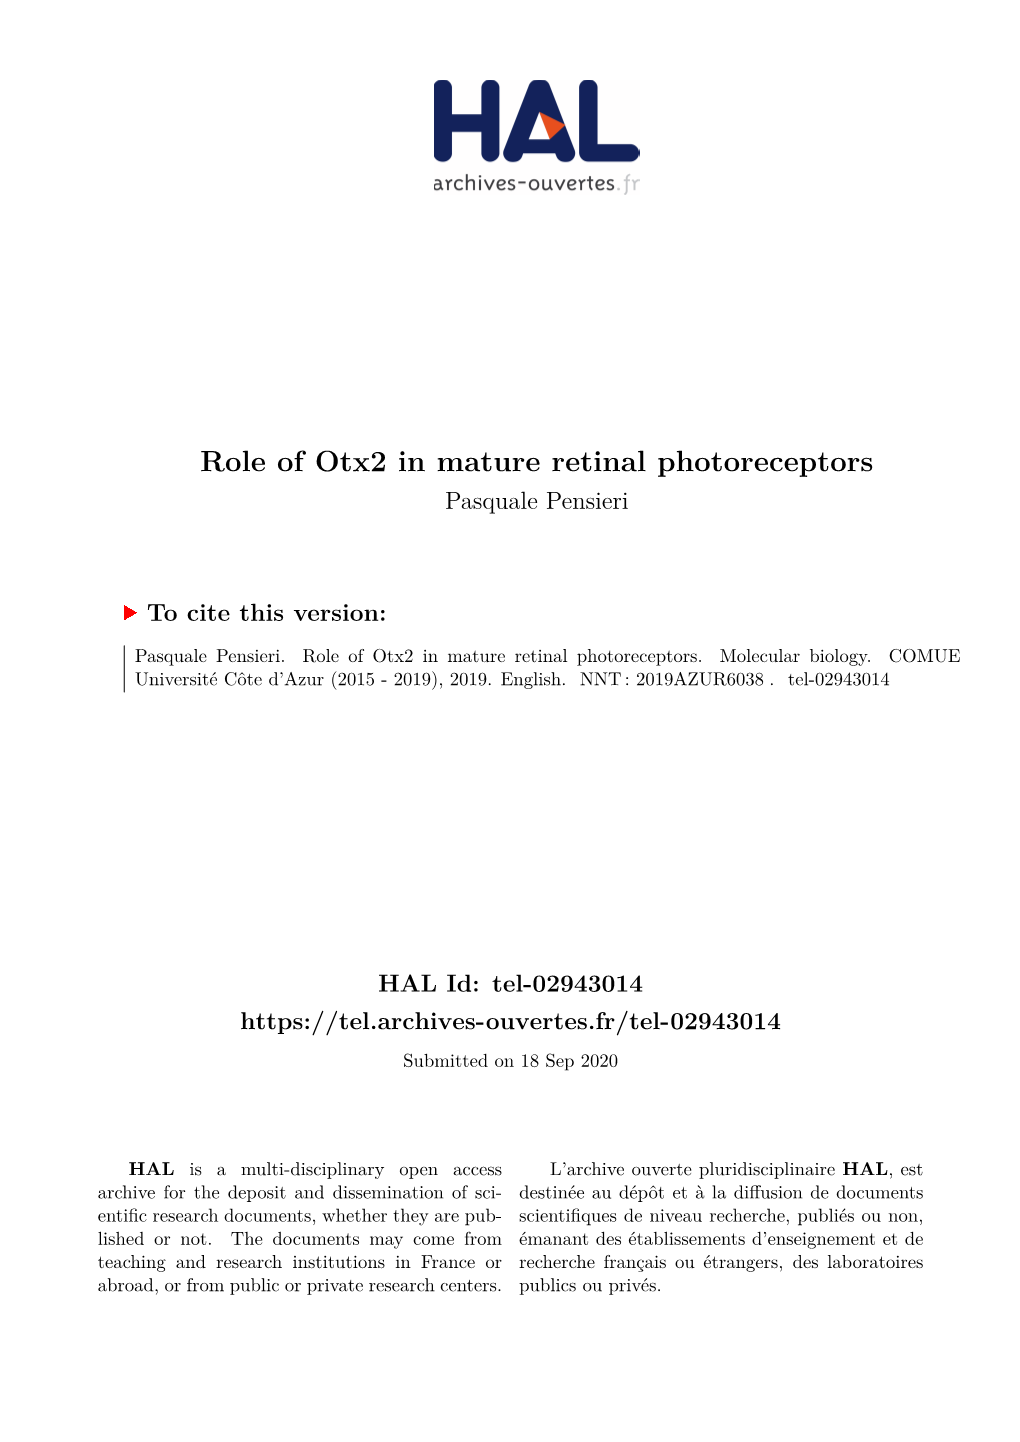 Role of Otx2 in Mature Retinal Photoreceptors Pasquale Pensieri